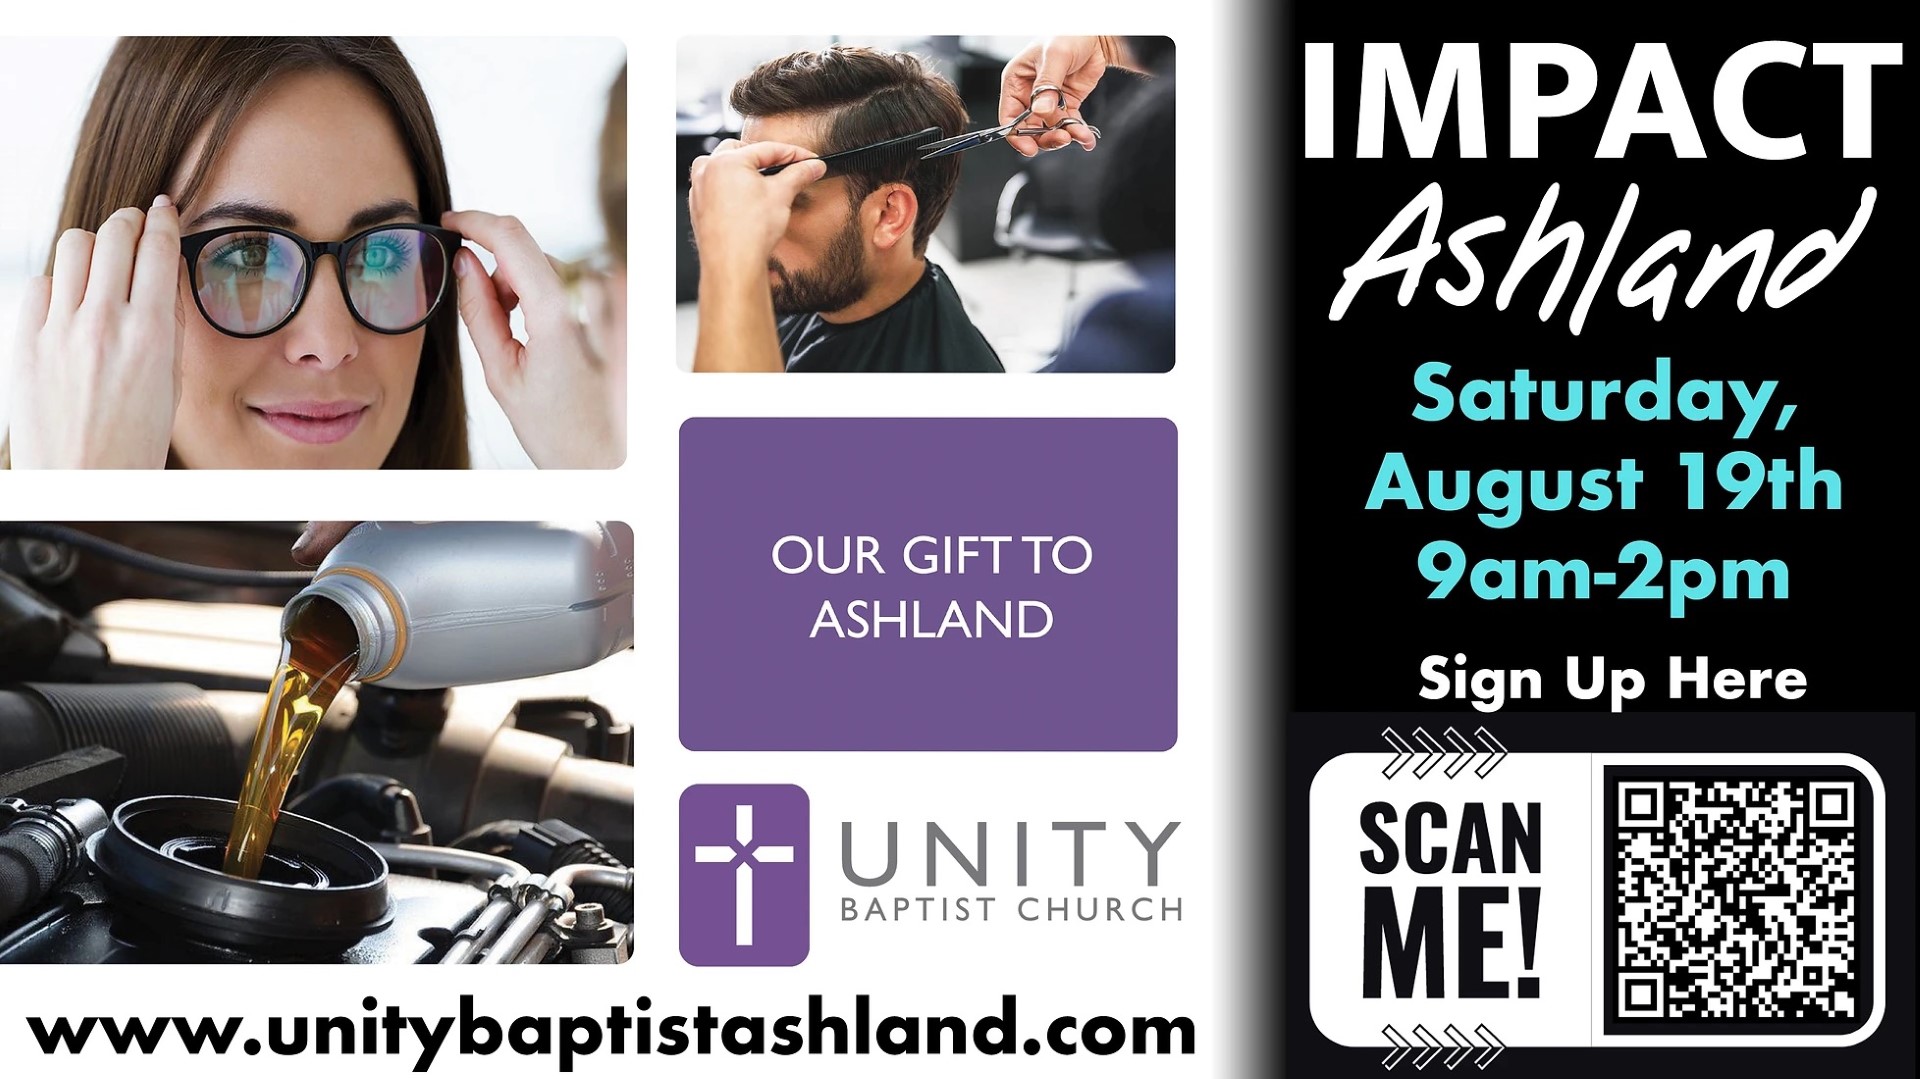 Impact Ashland to be Held at Unity Baptist Church